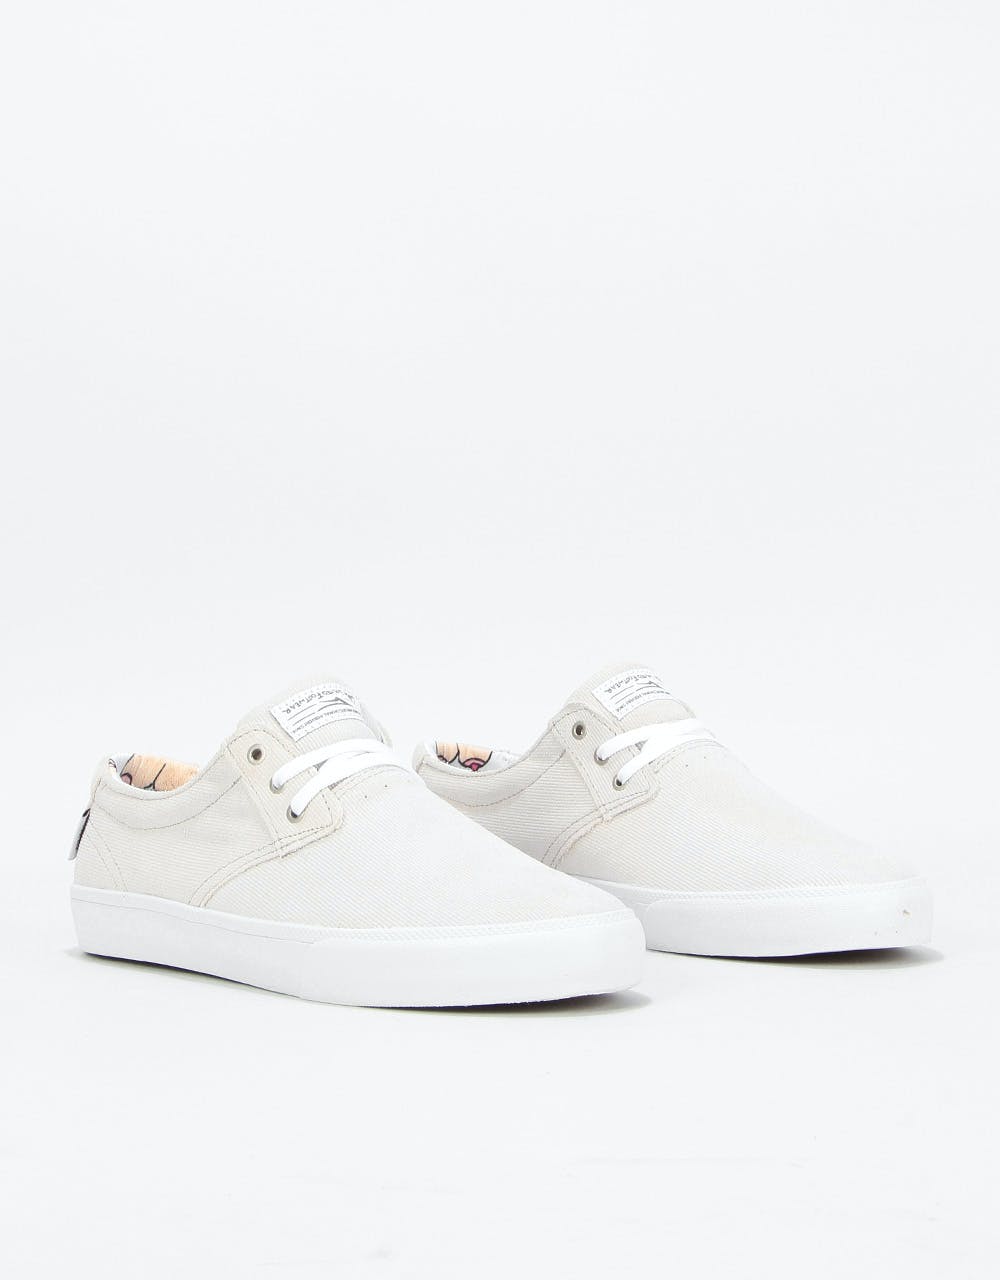 Lakai Daly Skate Shoes - White Suede